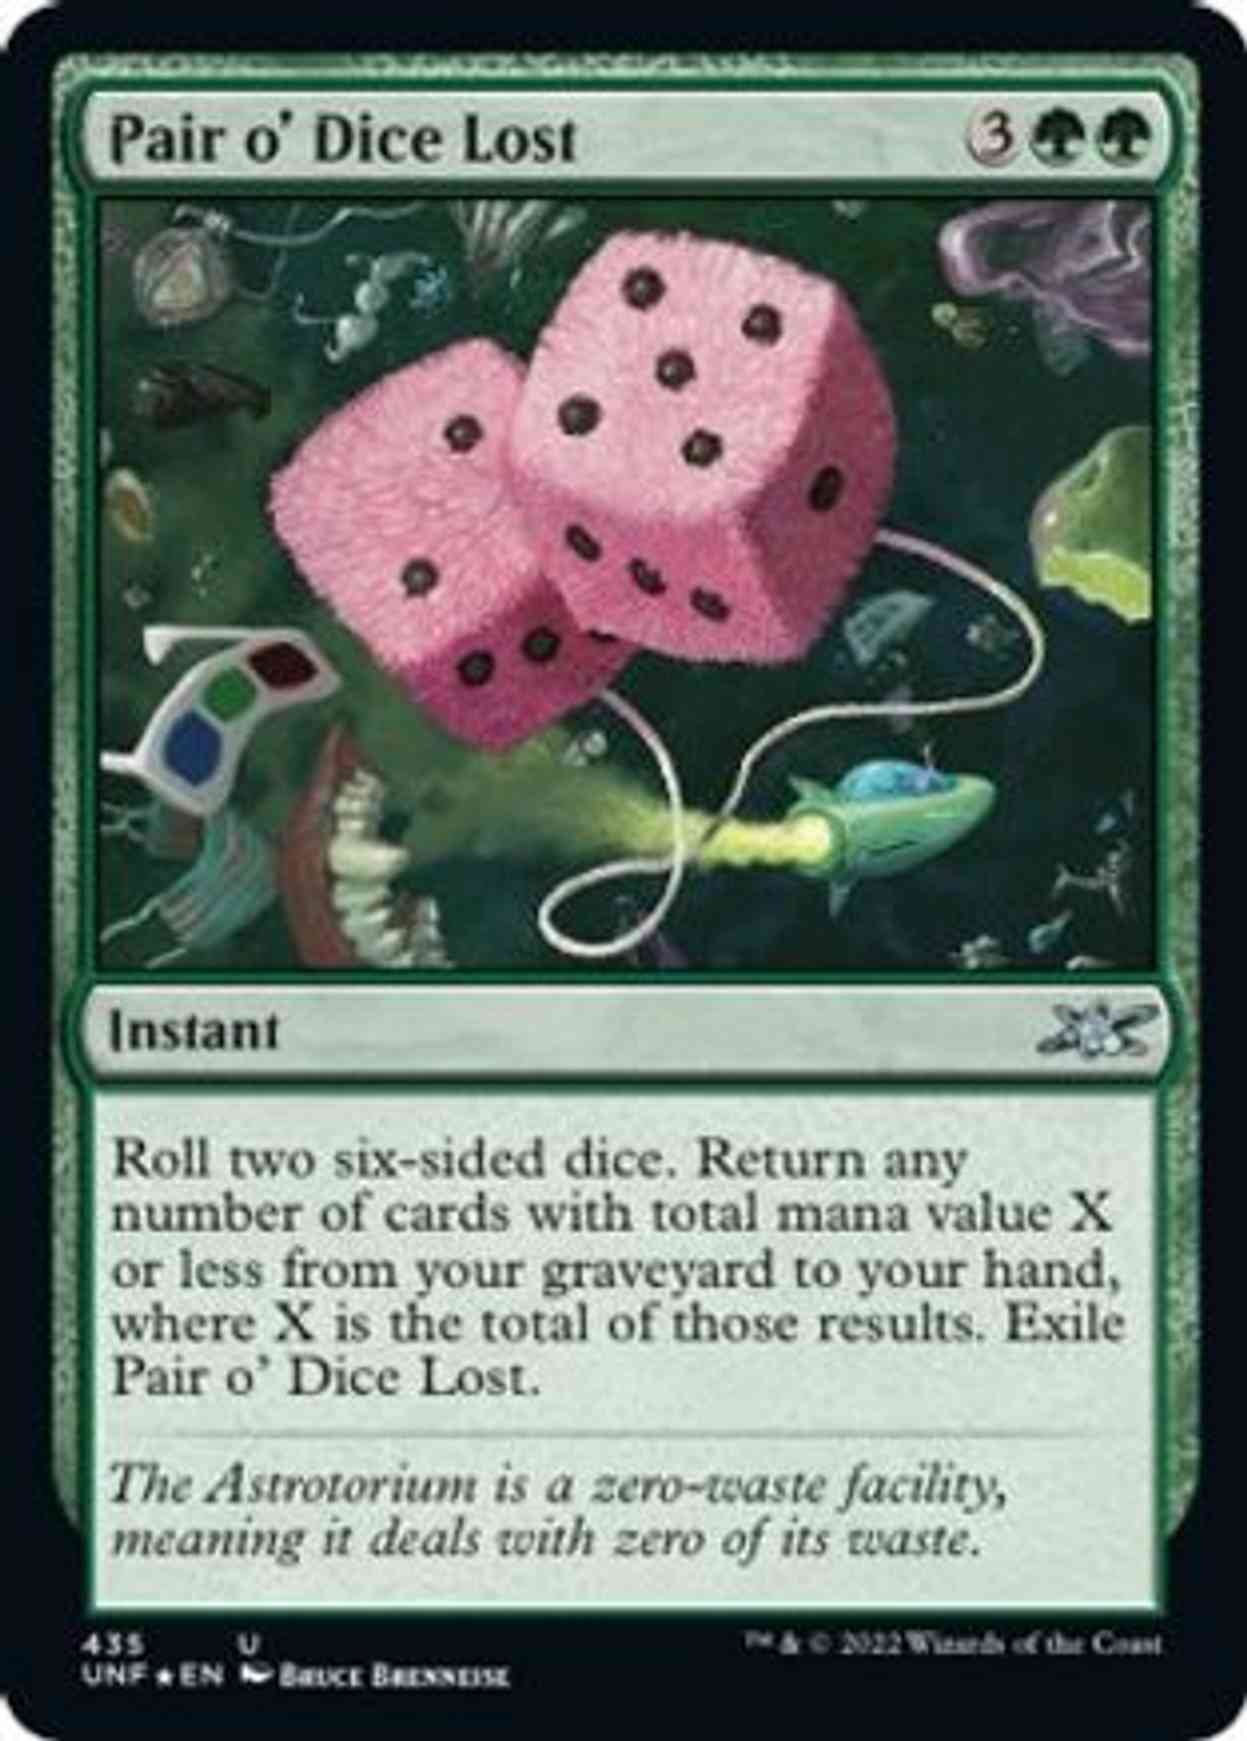 Pair o' Dice Lost (Galaxy Foil) magic card front